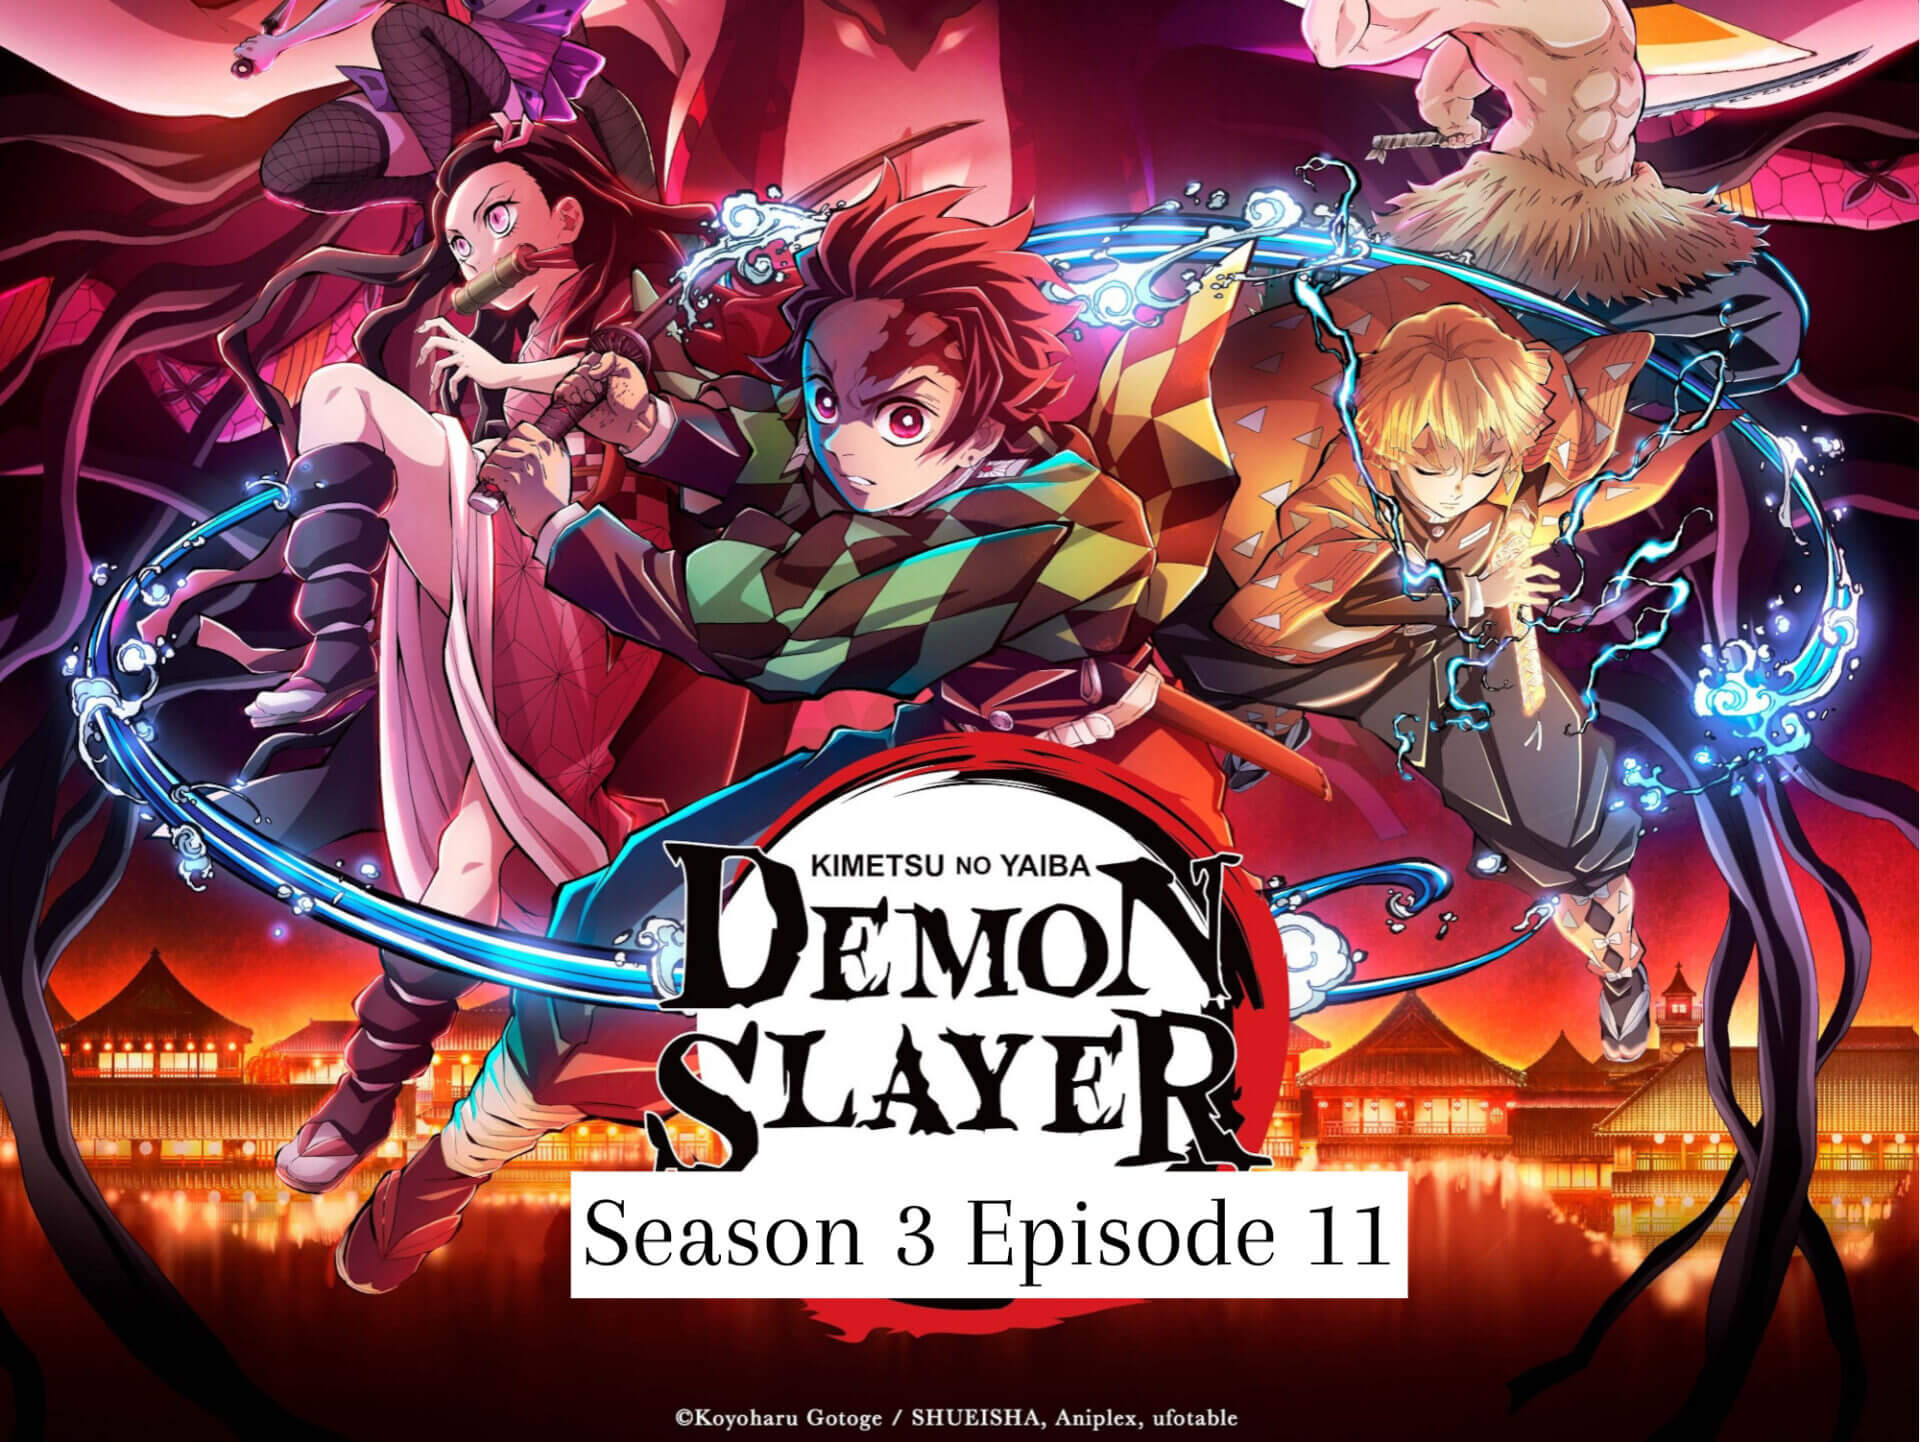 Demon slayer season 2 countdown malaysia